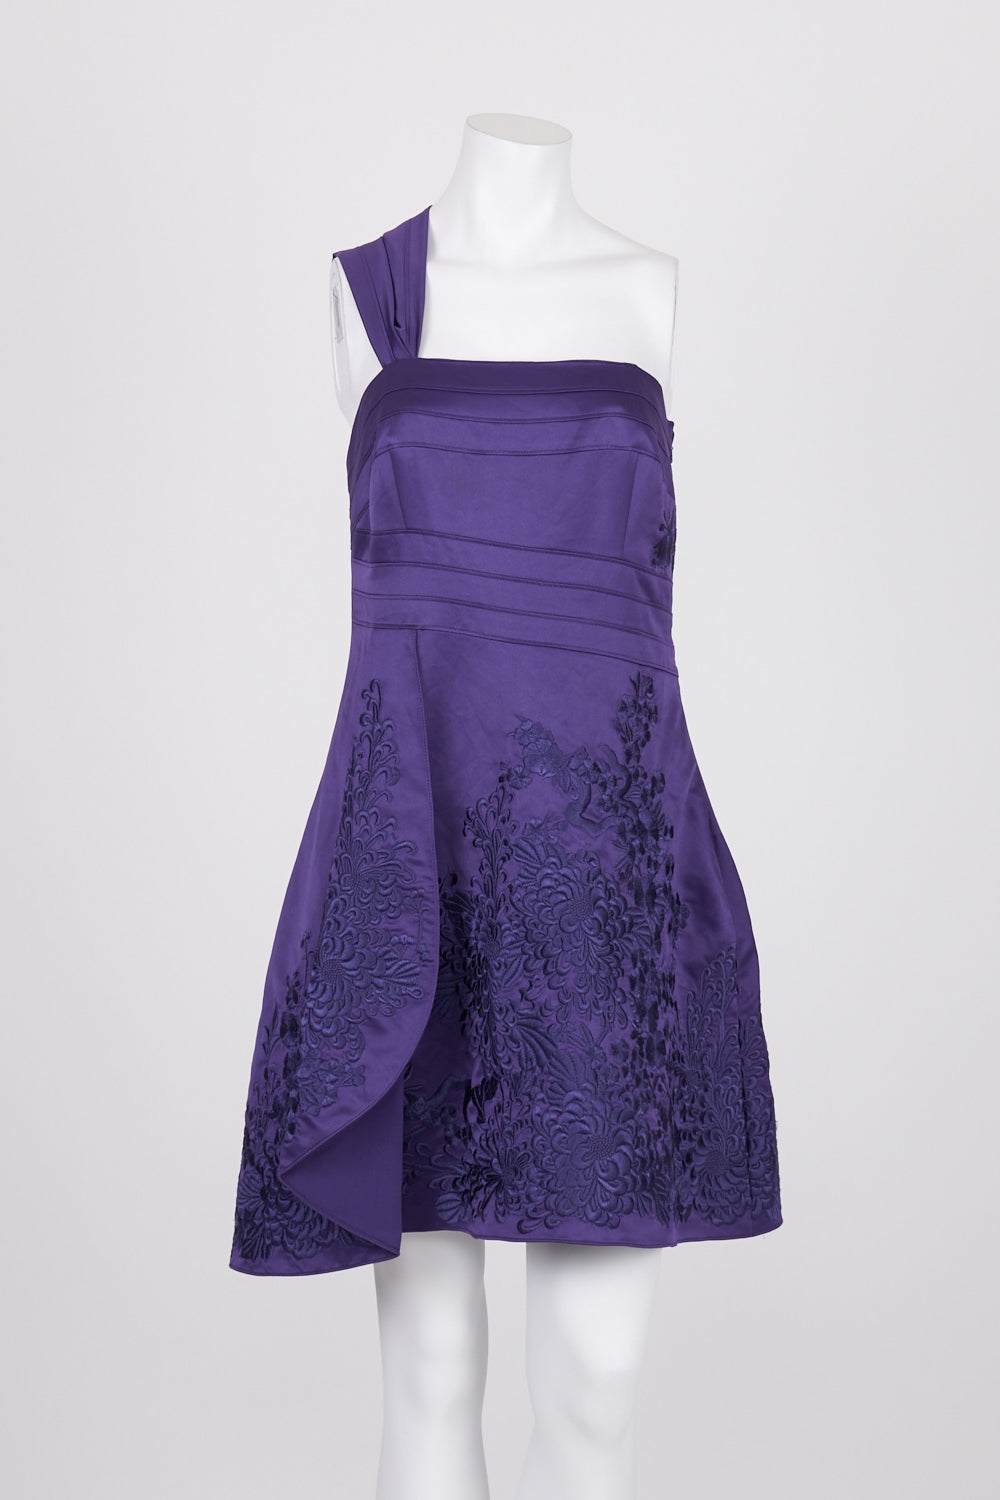 Karen Millen Purple Embroidered Dress 14